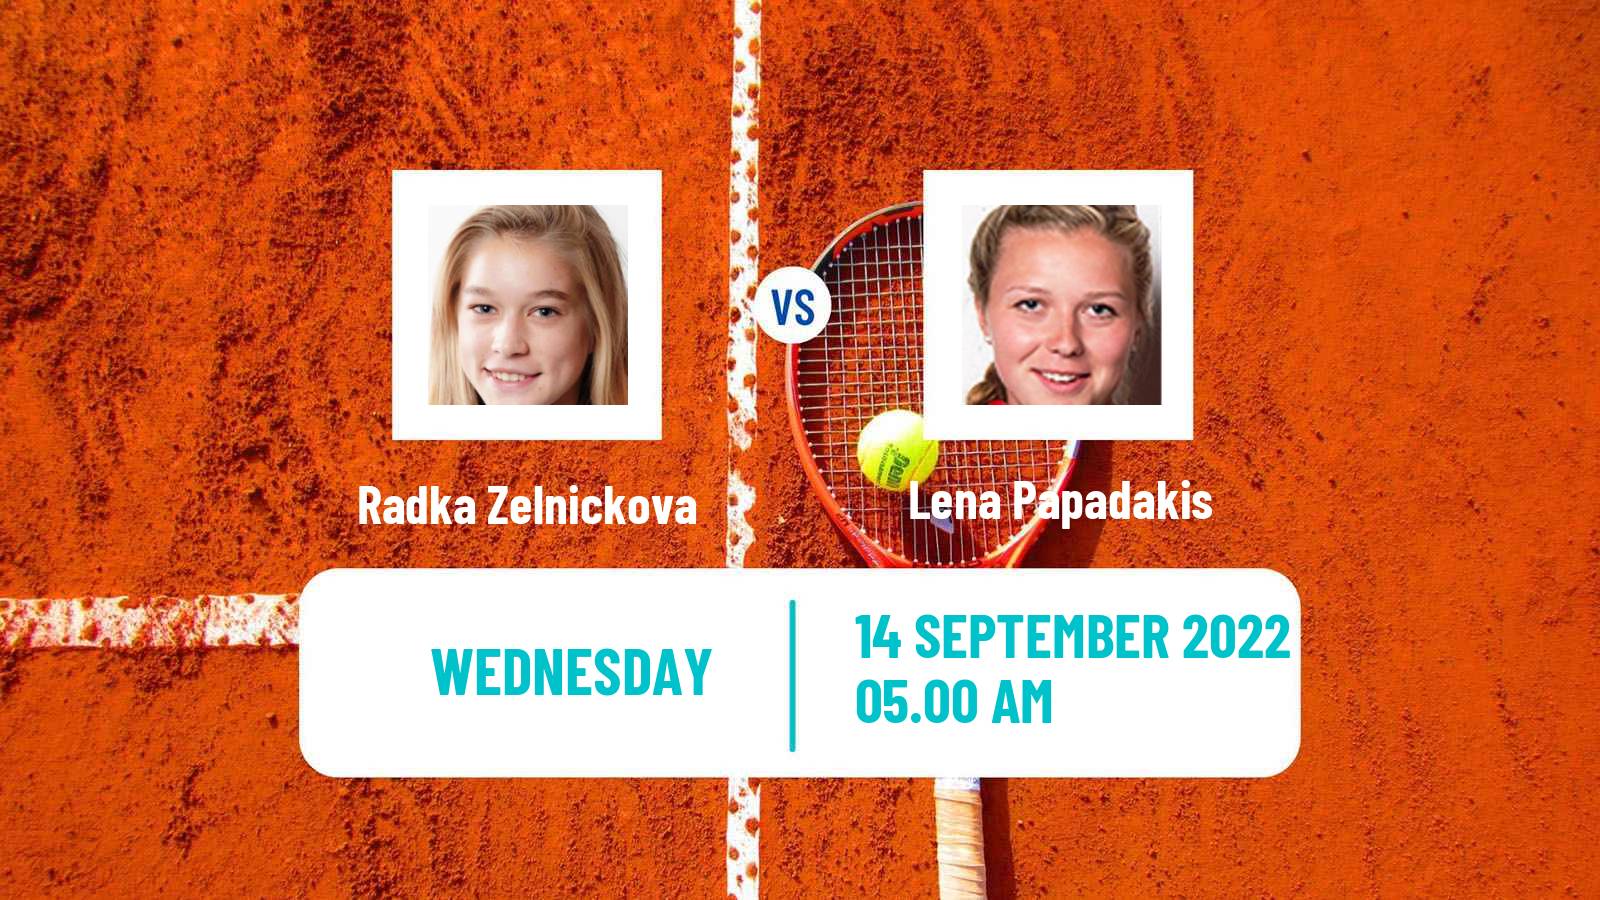 Tennis ITF Tournaments Radka Zelnickova - Lena Papadakis